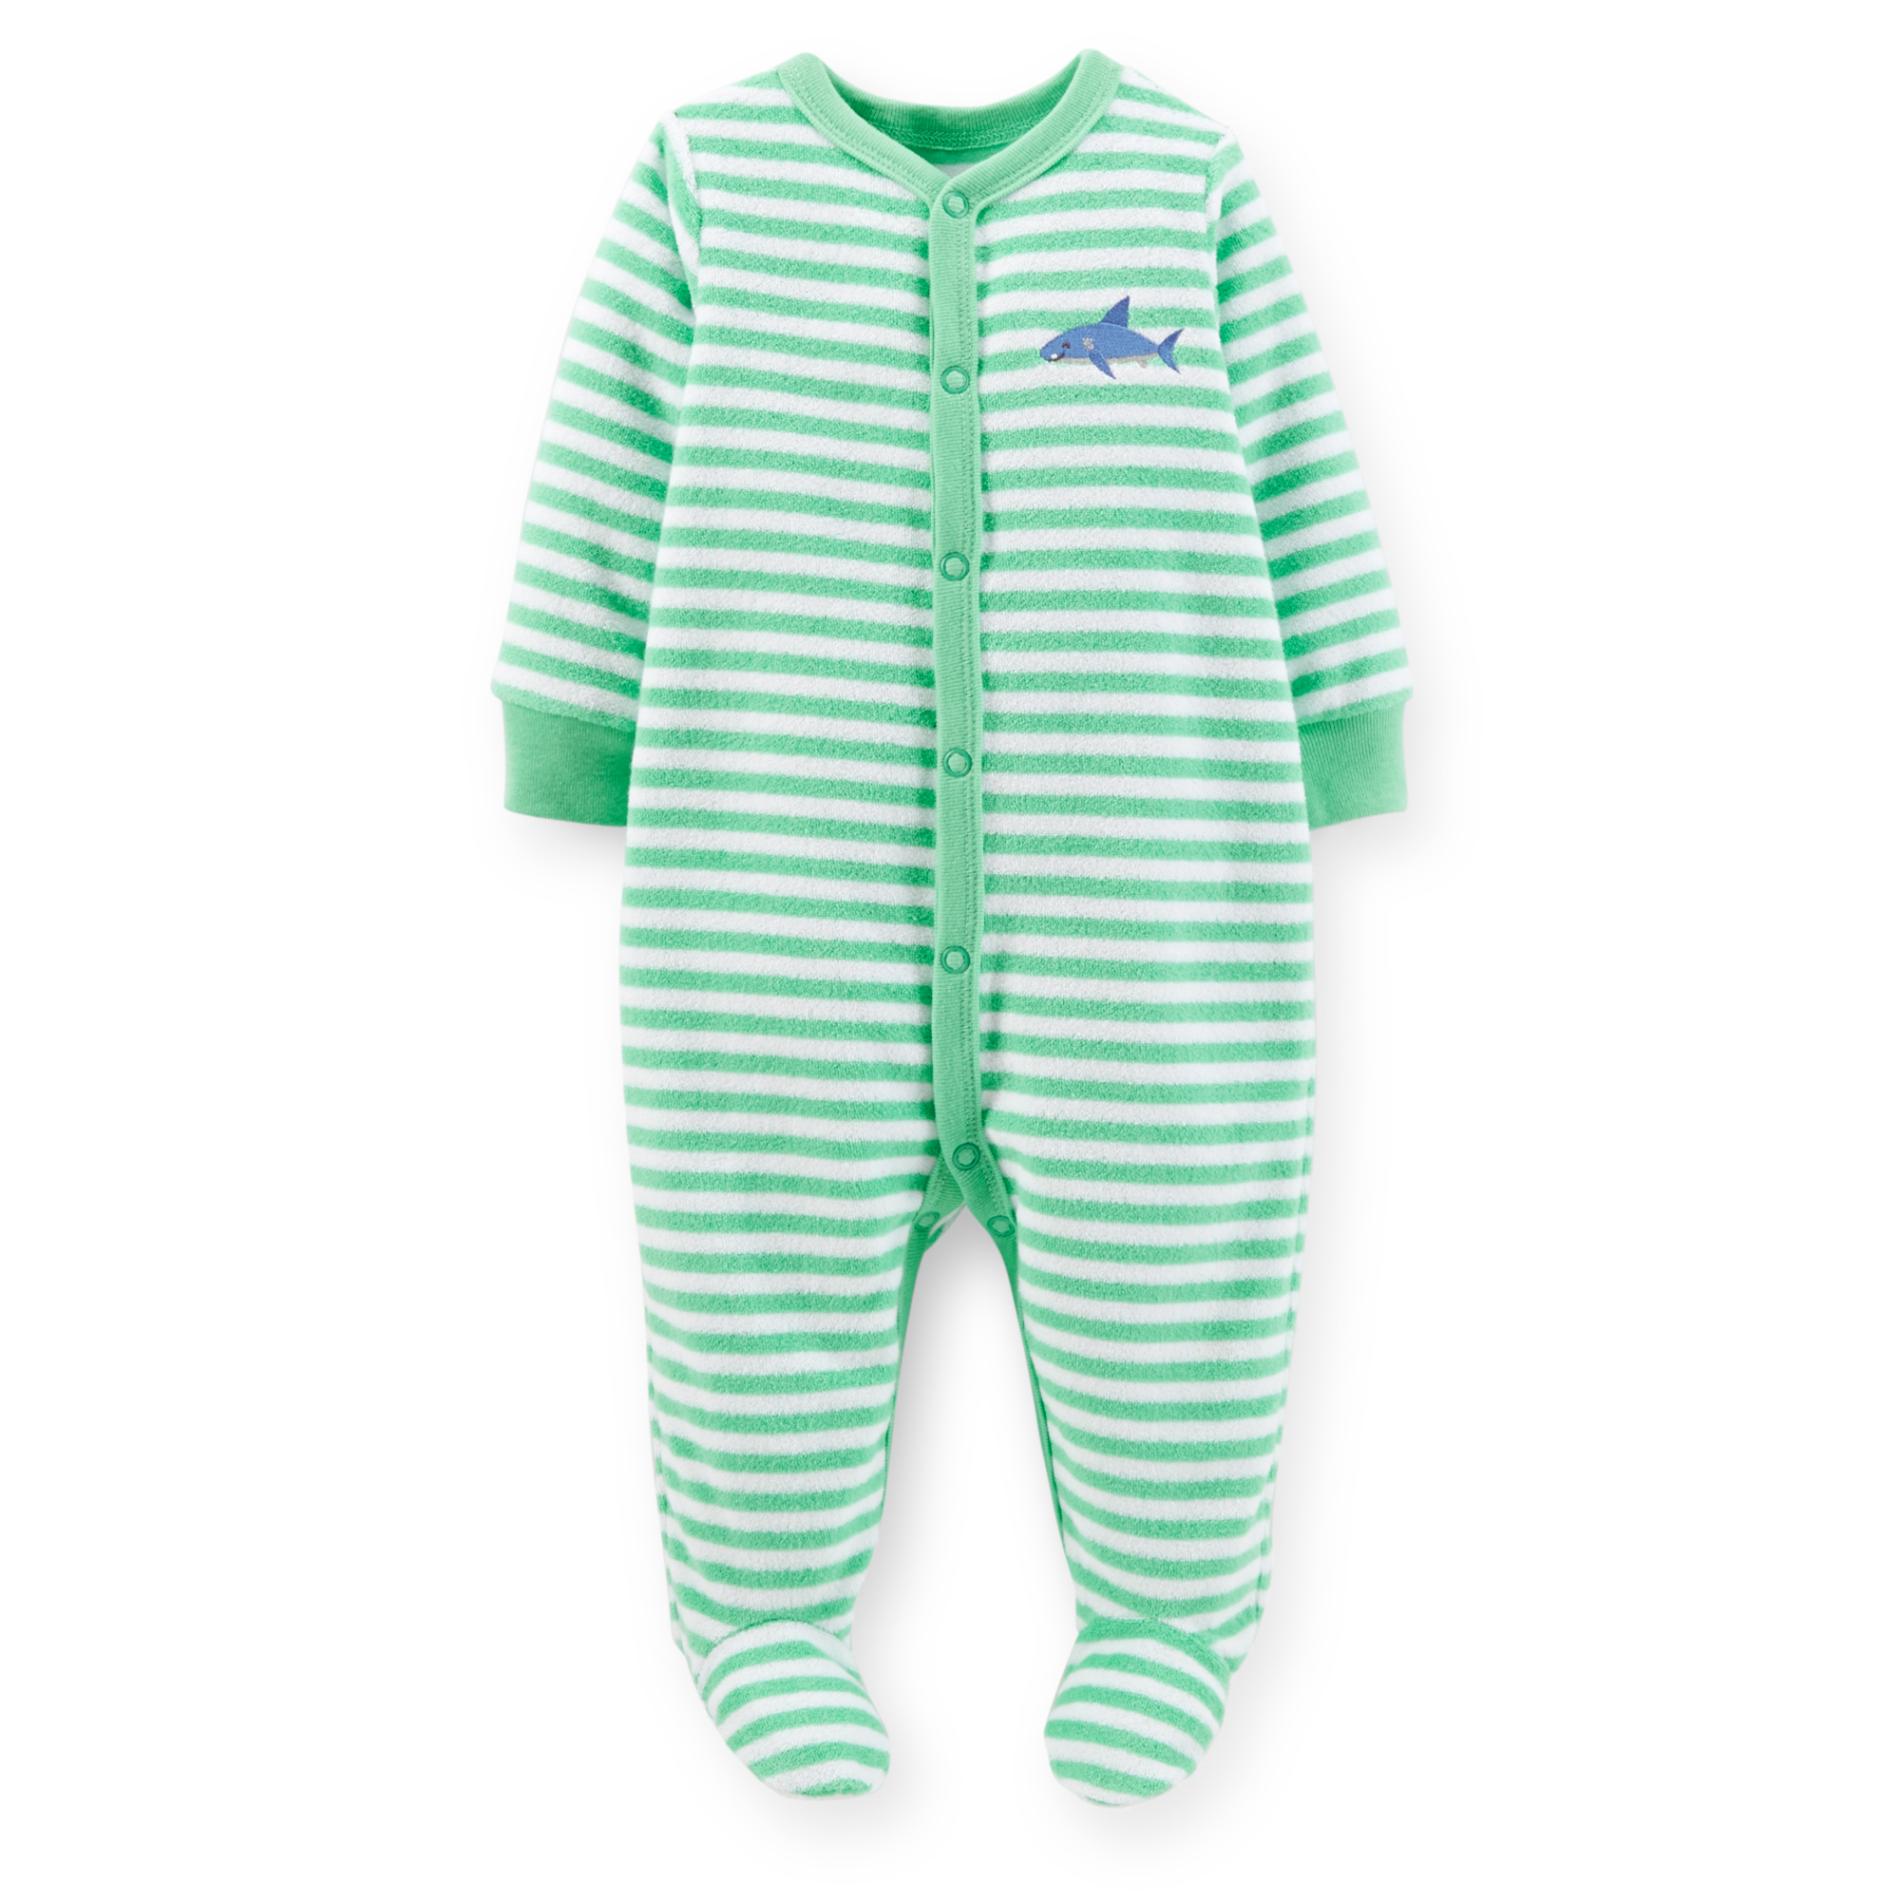 Carter's Newborn Boy's Snap-Front Sleeper Pajamas - Shark